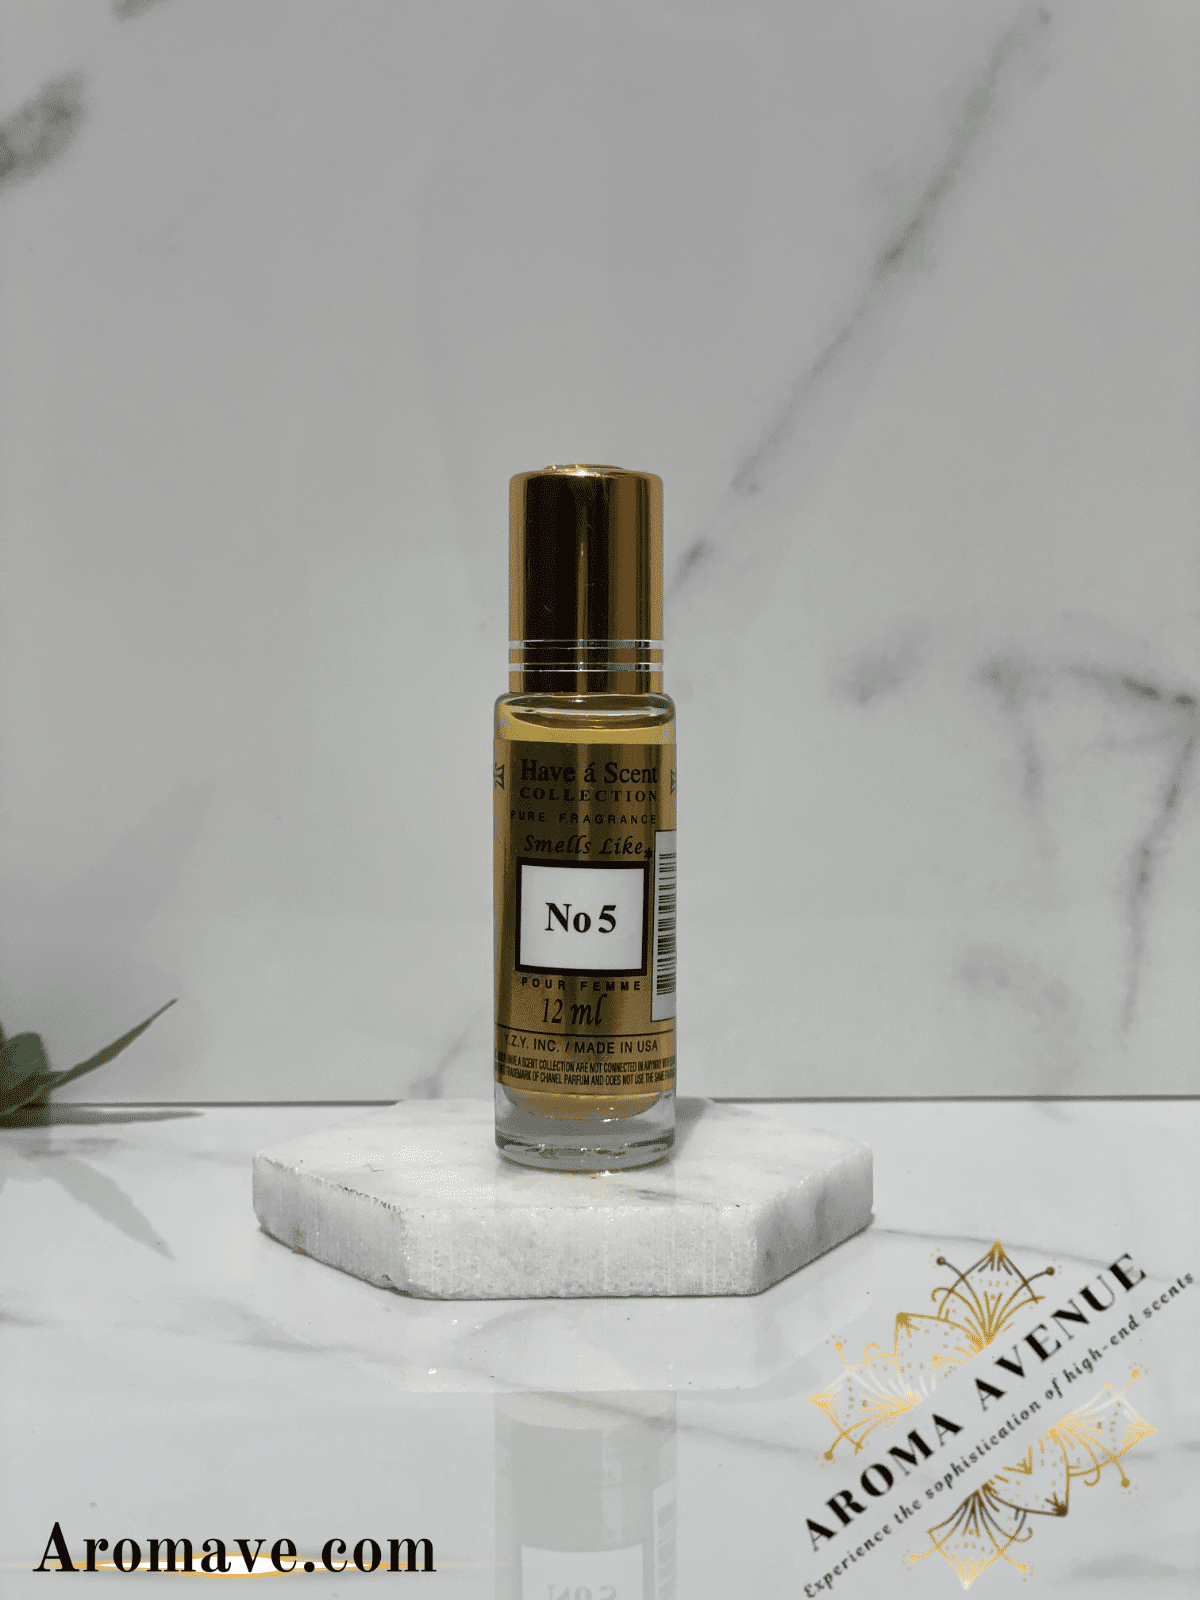 .com: Chanel Travel Size Perfume